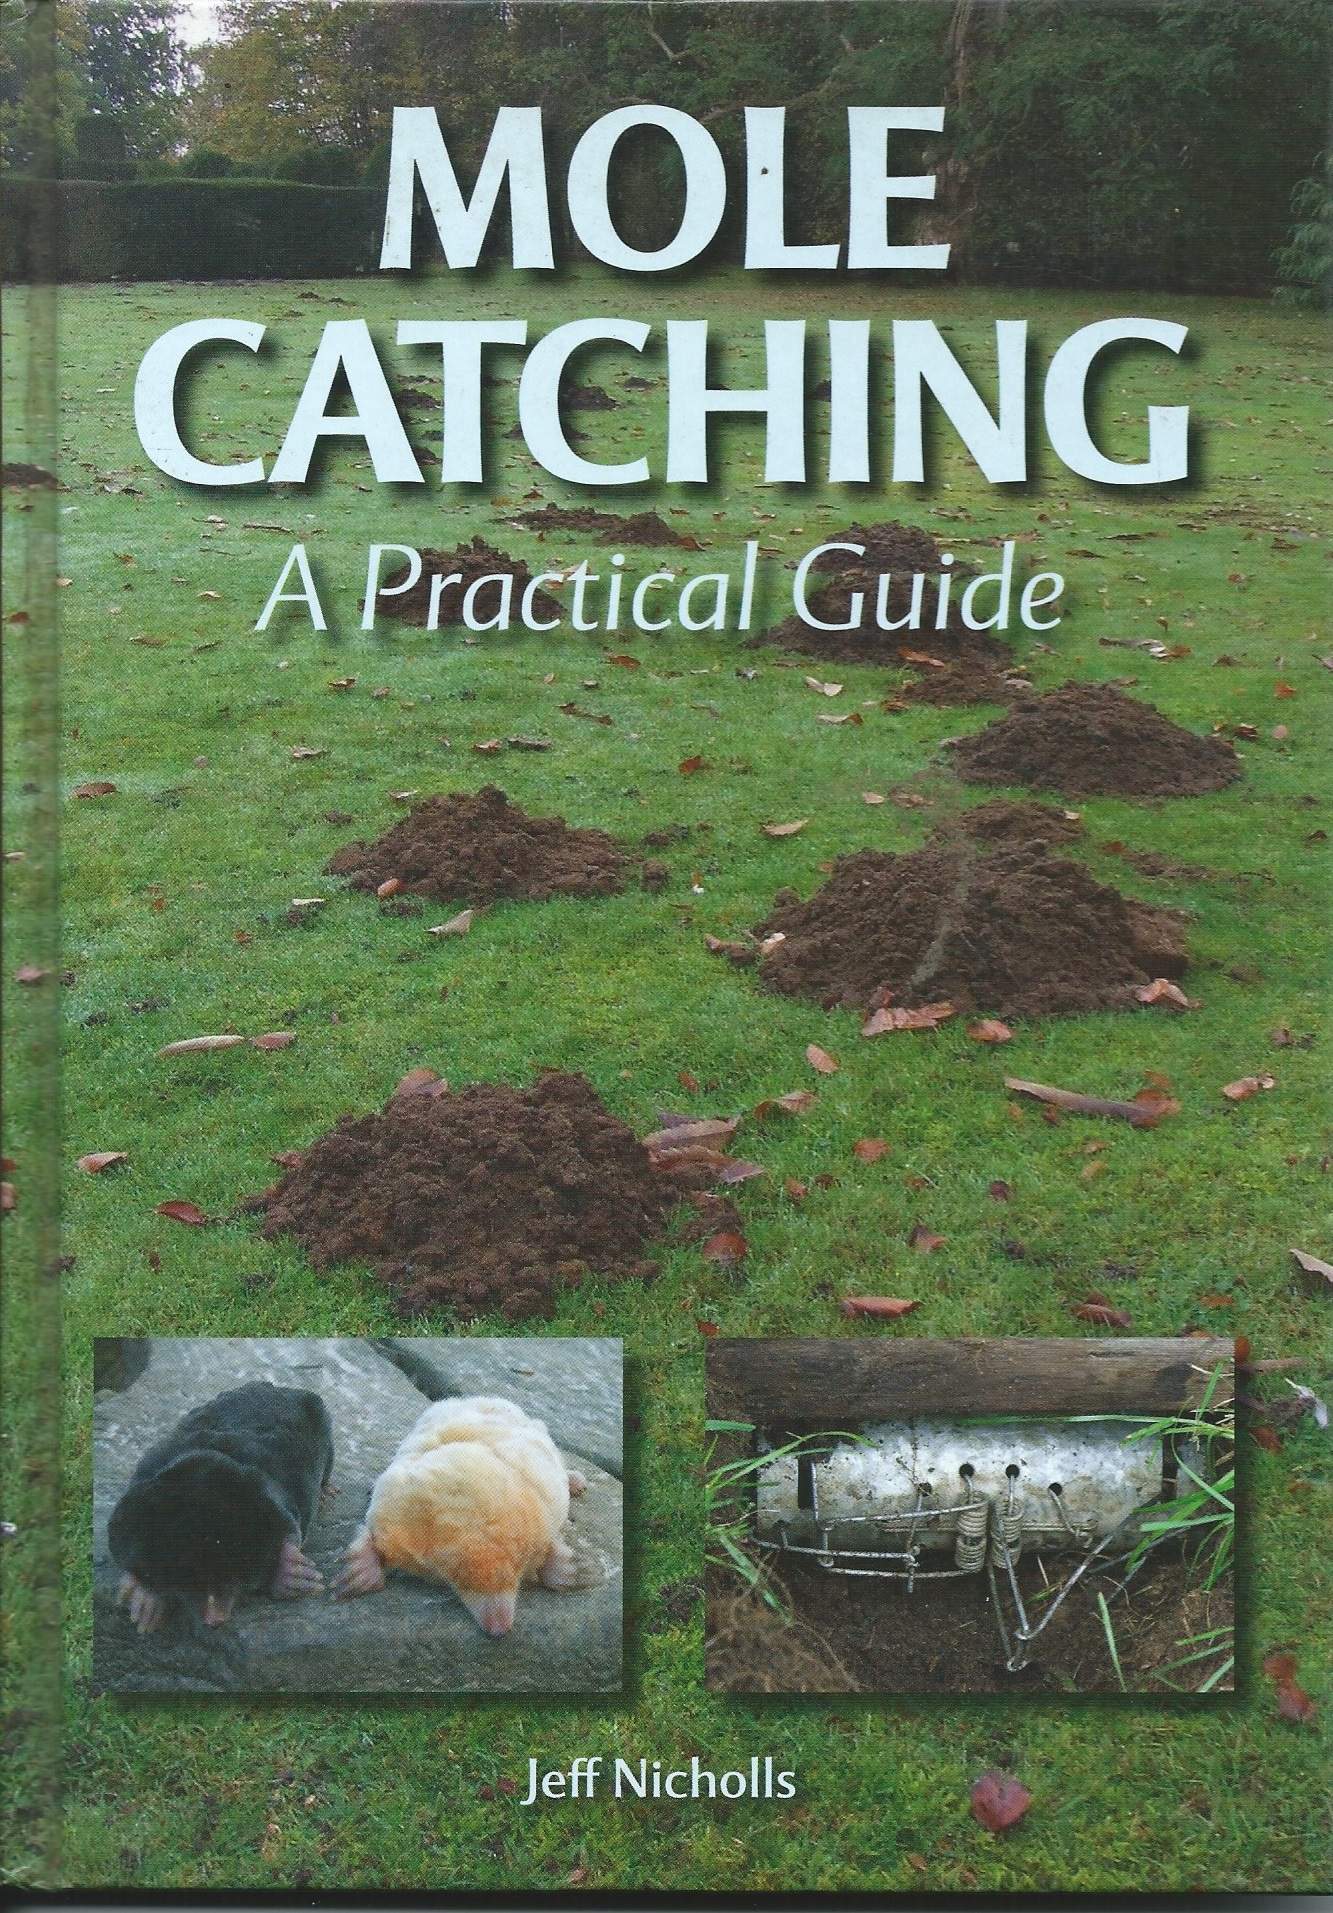 Mole Control Book - Mole Catching